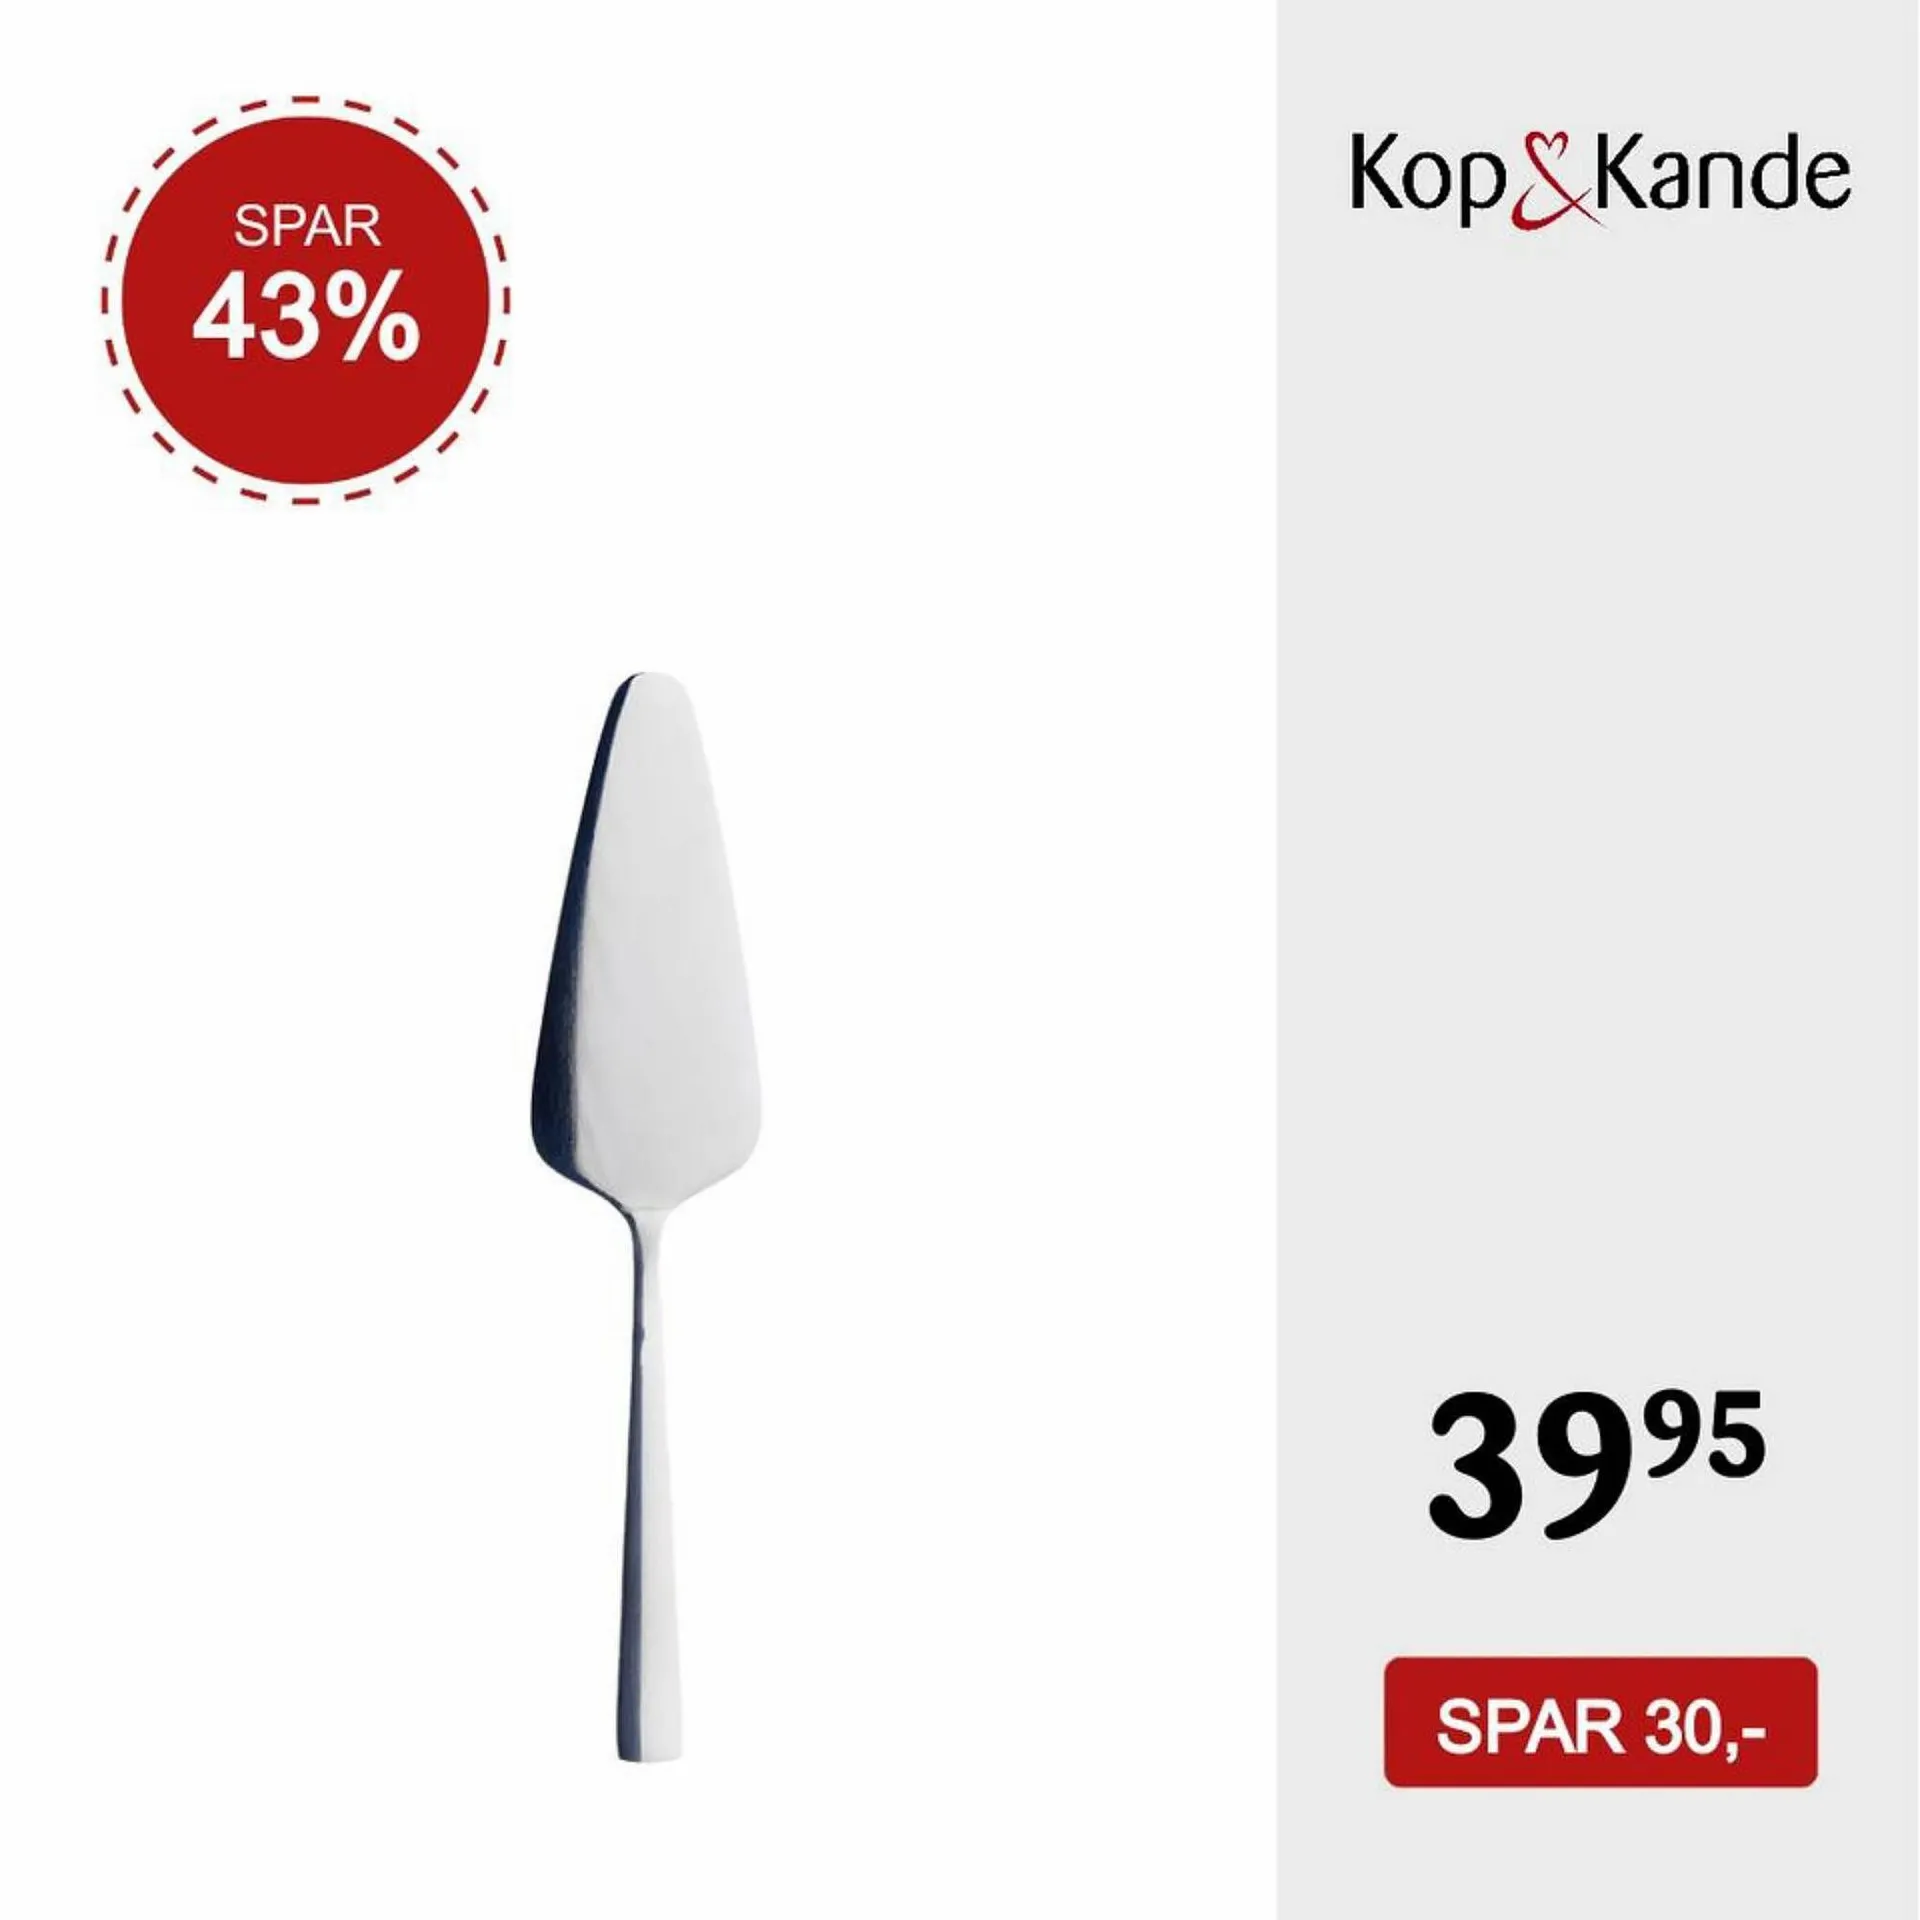 Kop & Kande tilbudsavis - 2